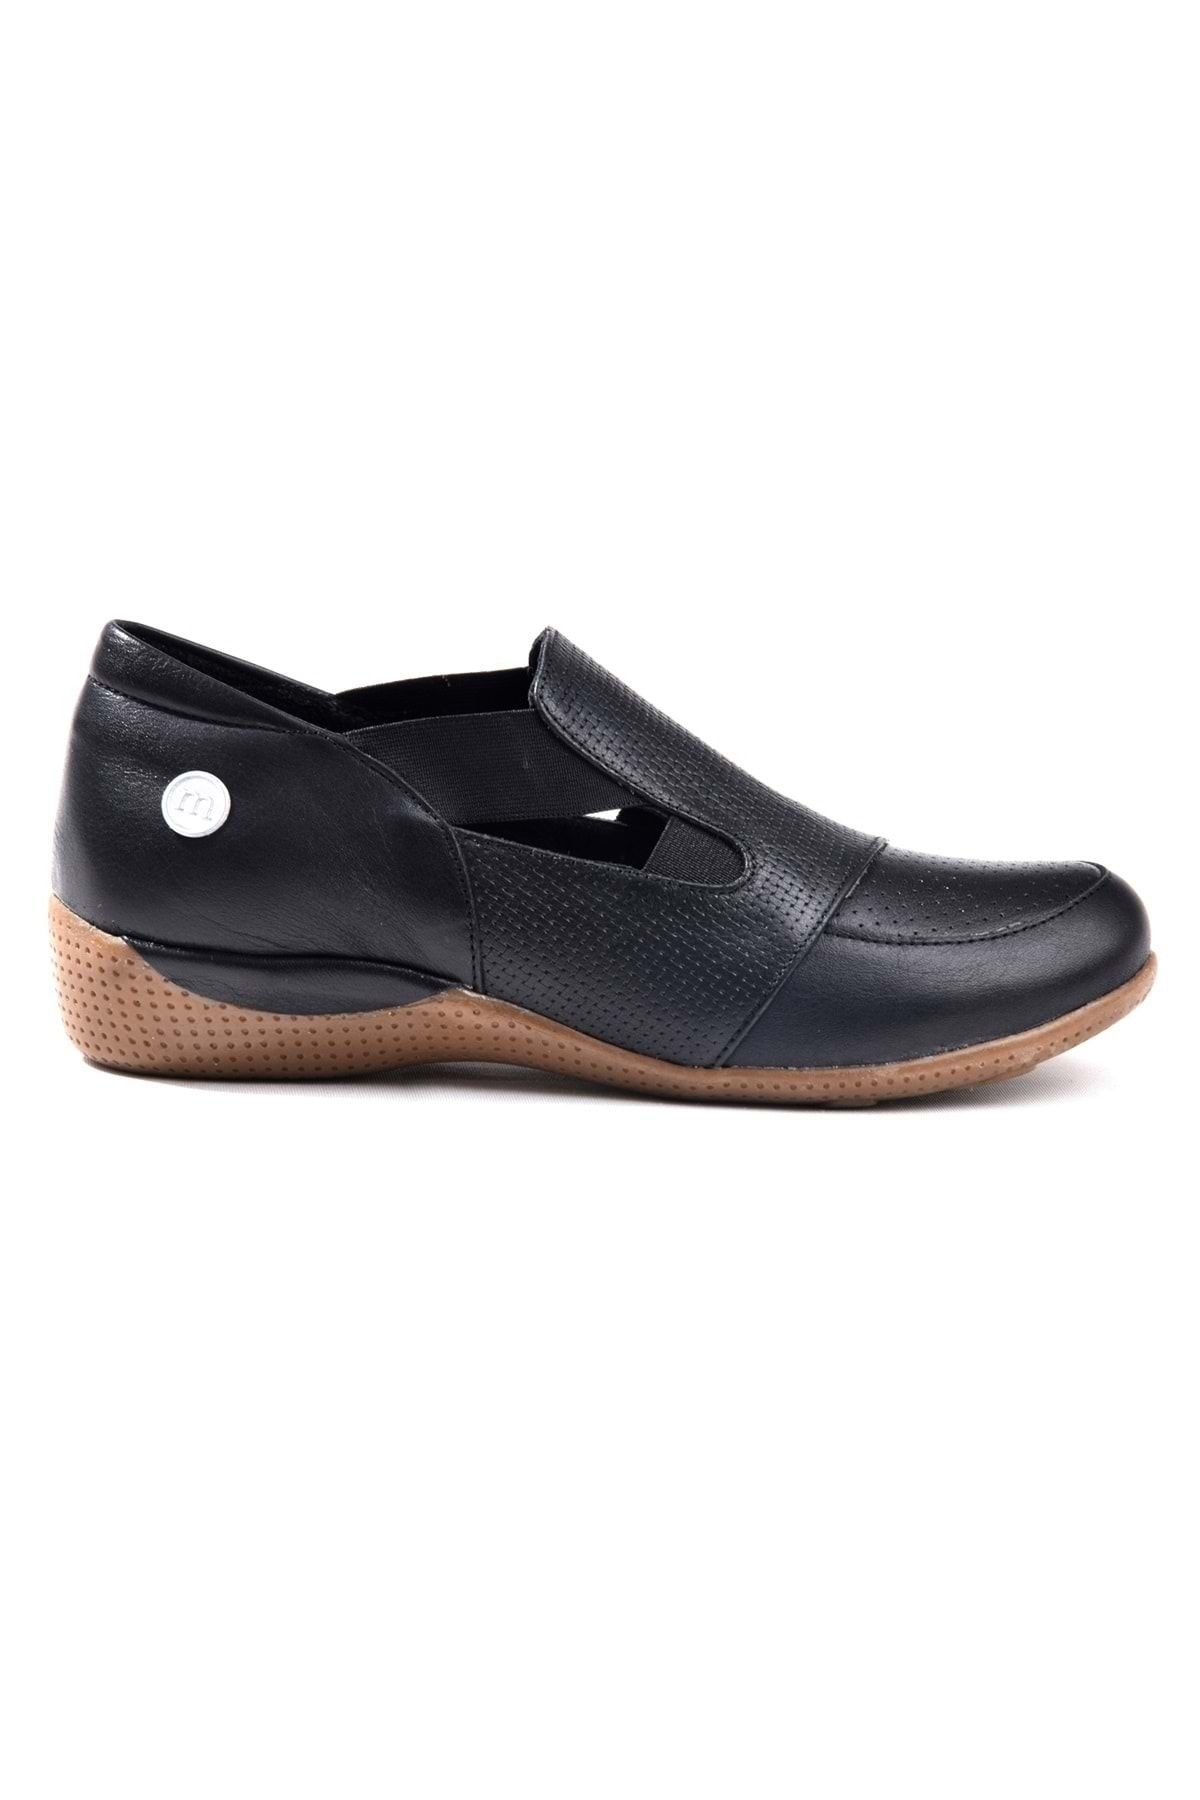 Mammamia D23ya-3680 Kadın Casual Ayakkabı